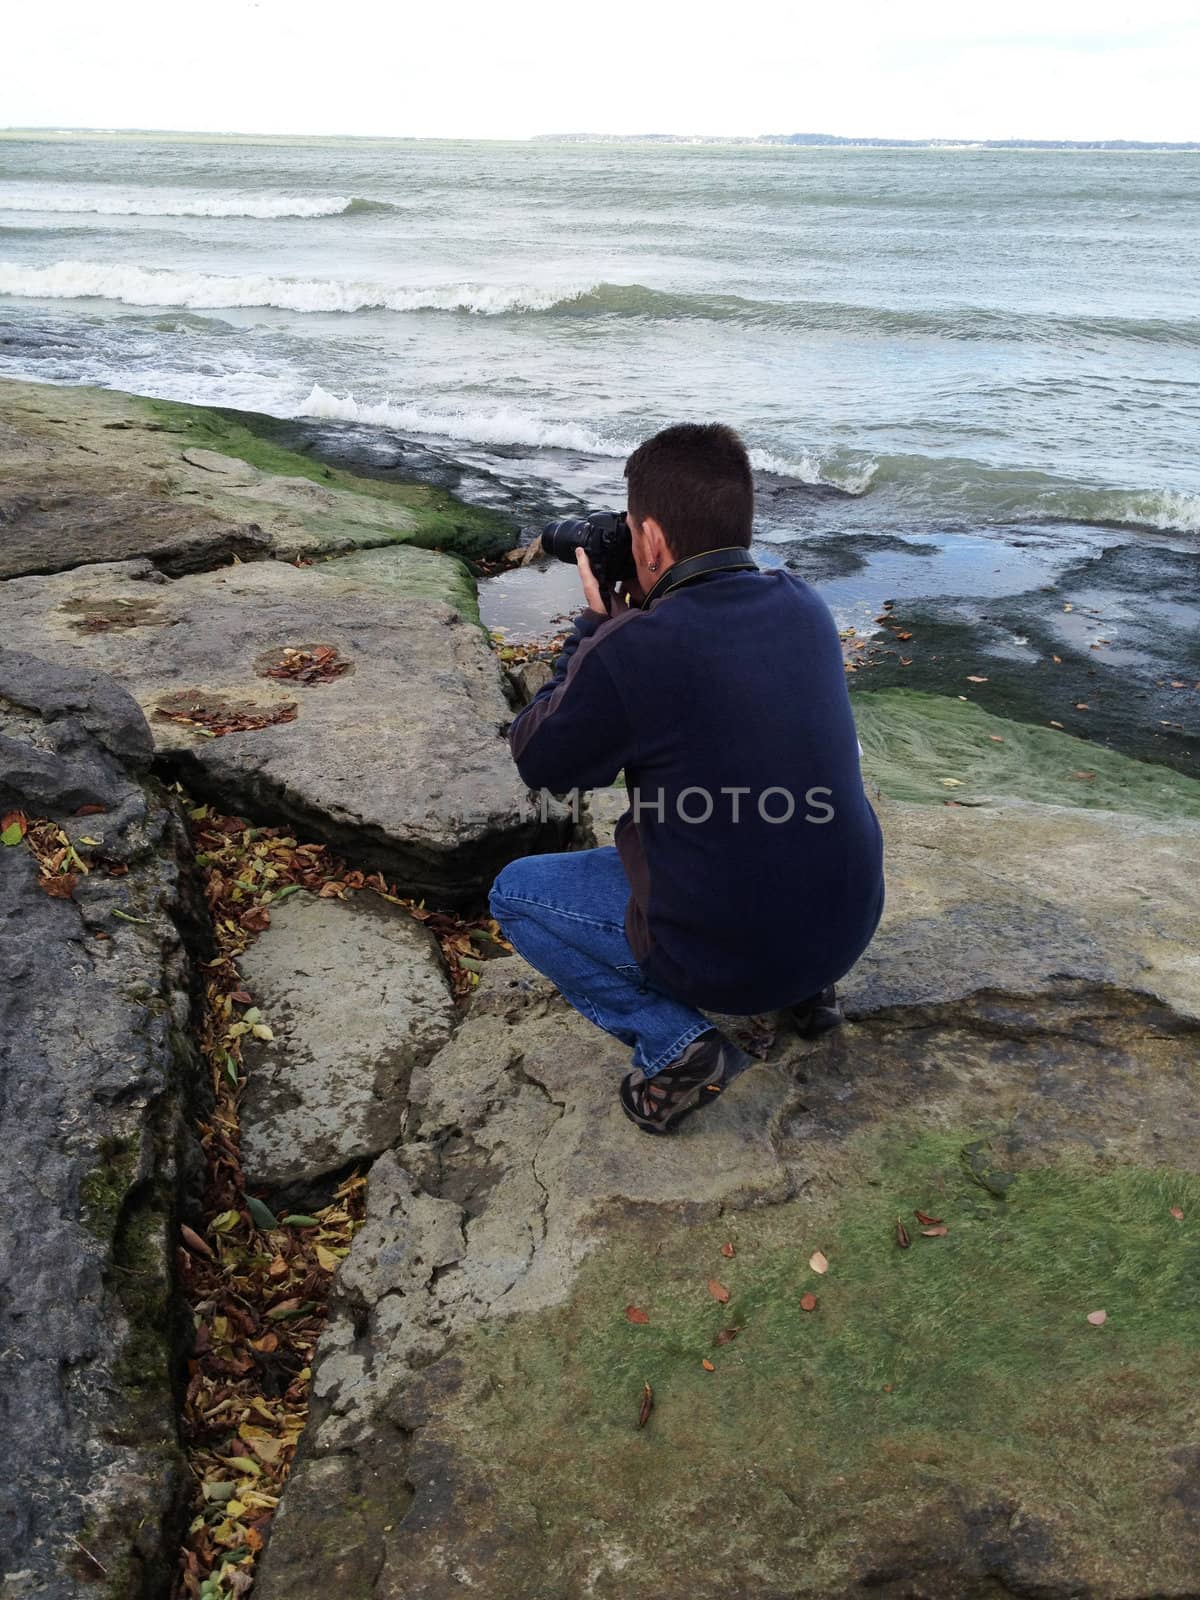 Man takes photos off coast of lake erie by RefocusPhoto